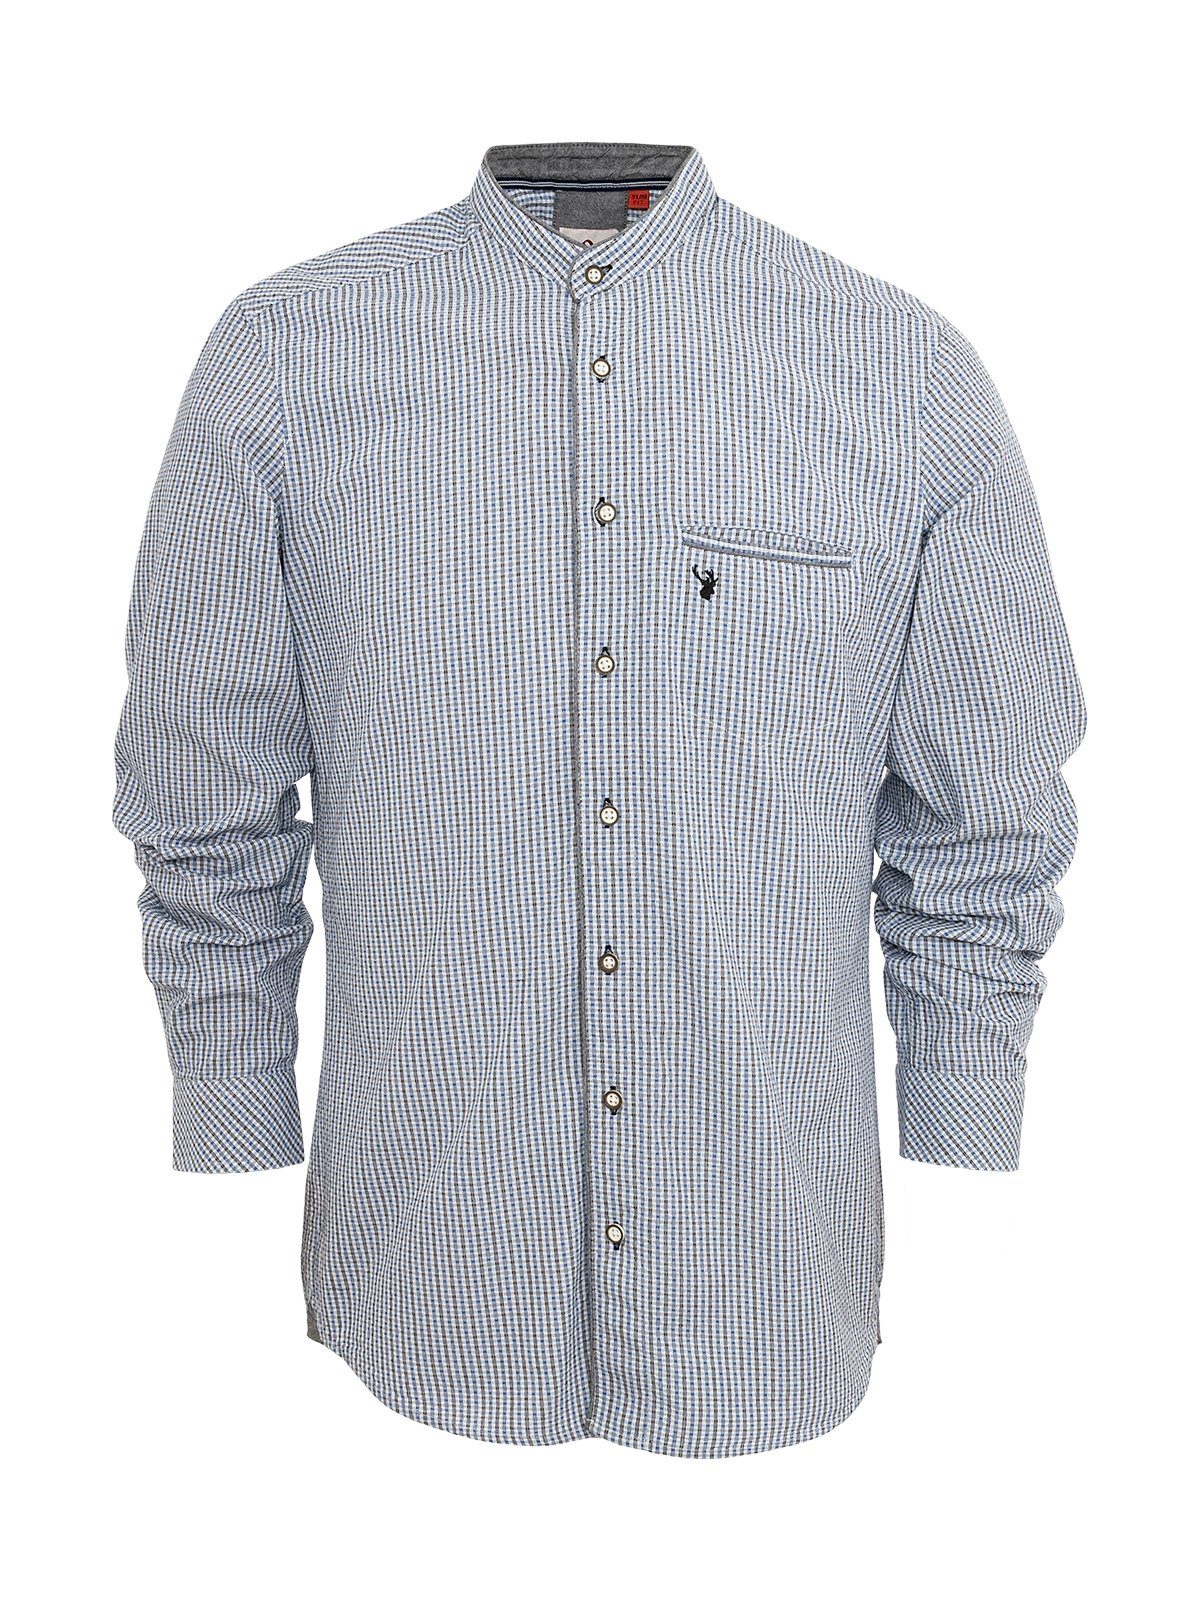 Spieth & Wensky Trachtenhemd Hemd ARTHUR blau (Slim Fit)